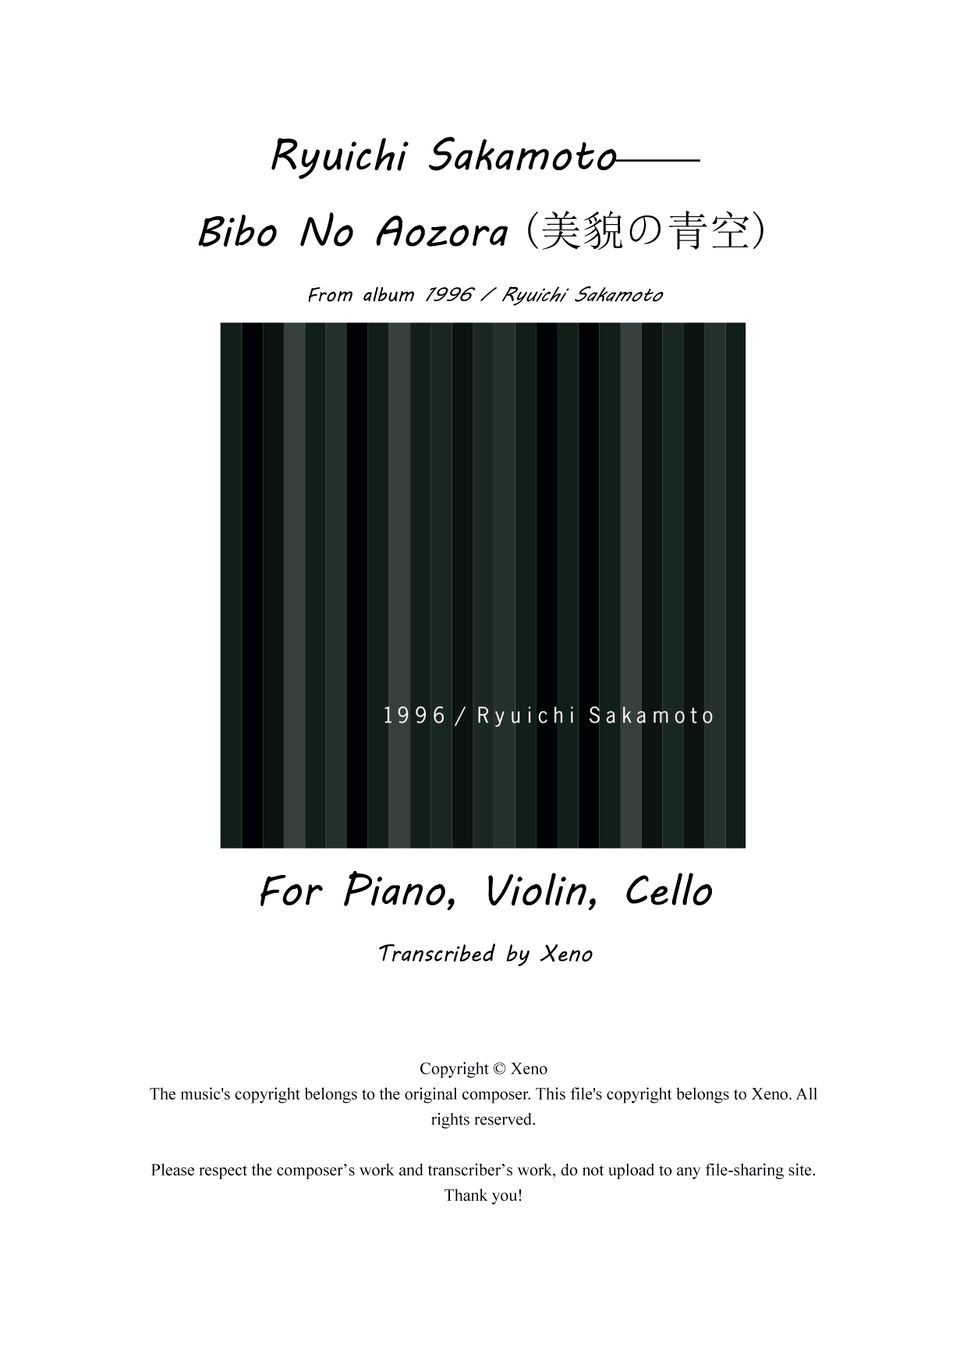 Ryuichi Sakamoto - Bibo No Aozora (Score and Parts) (Edited and 